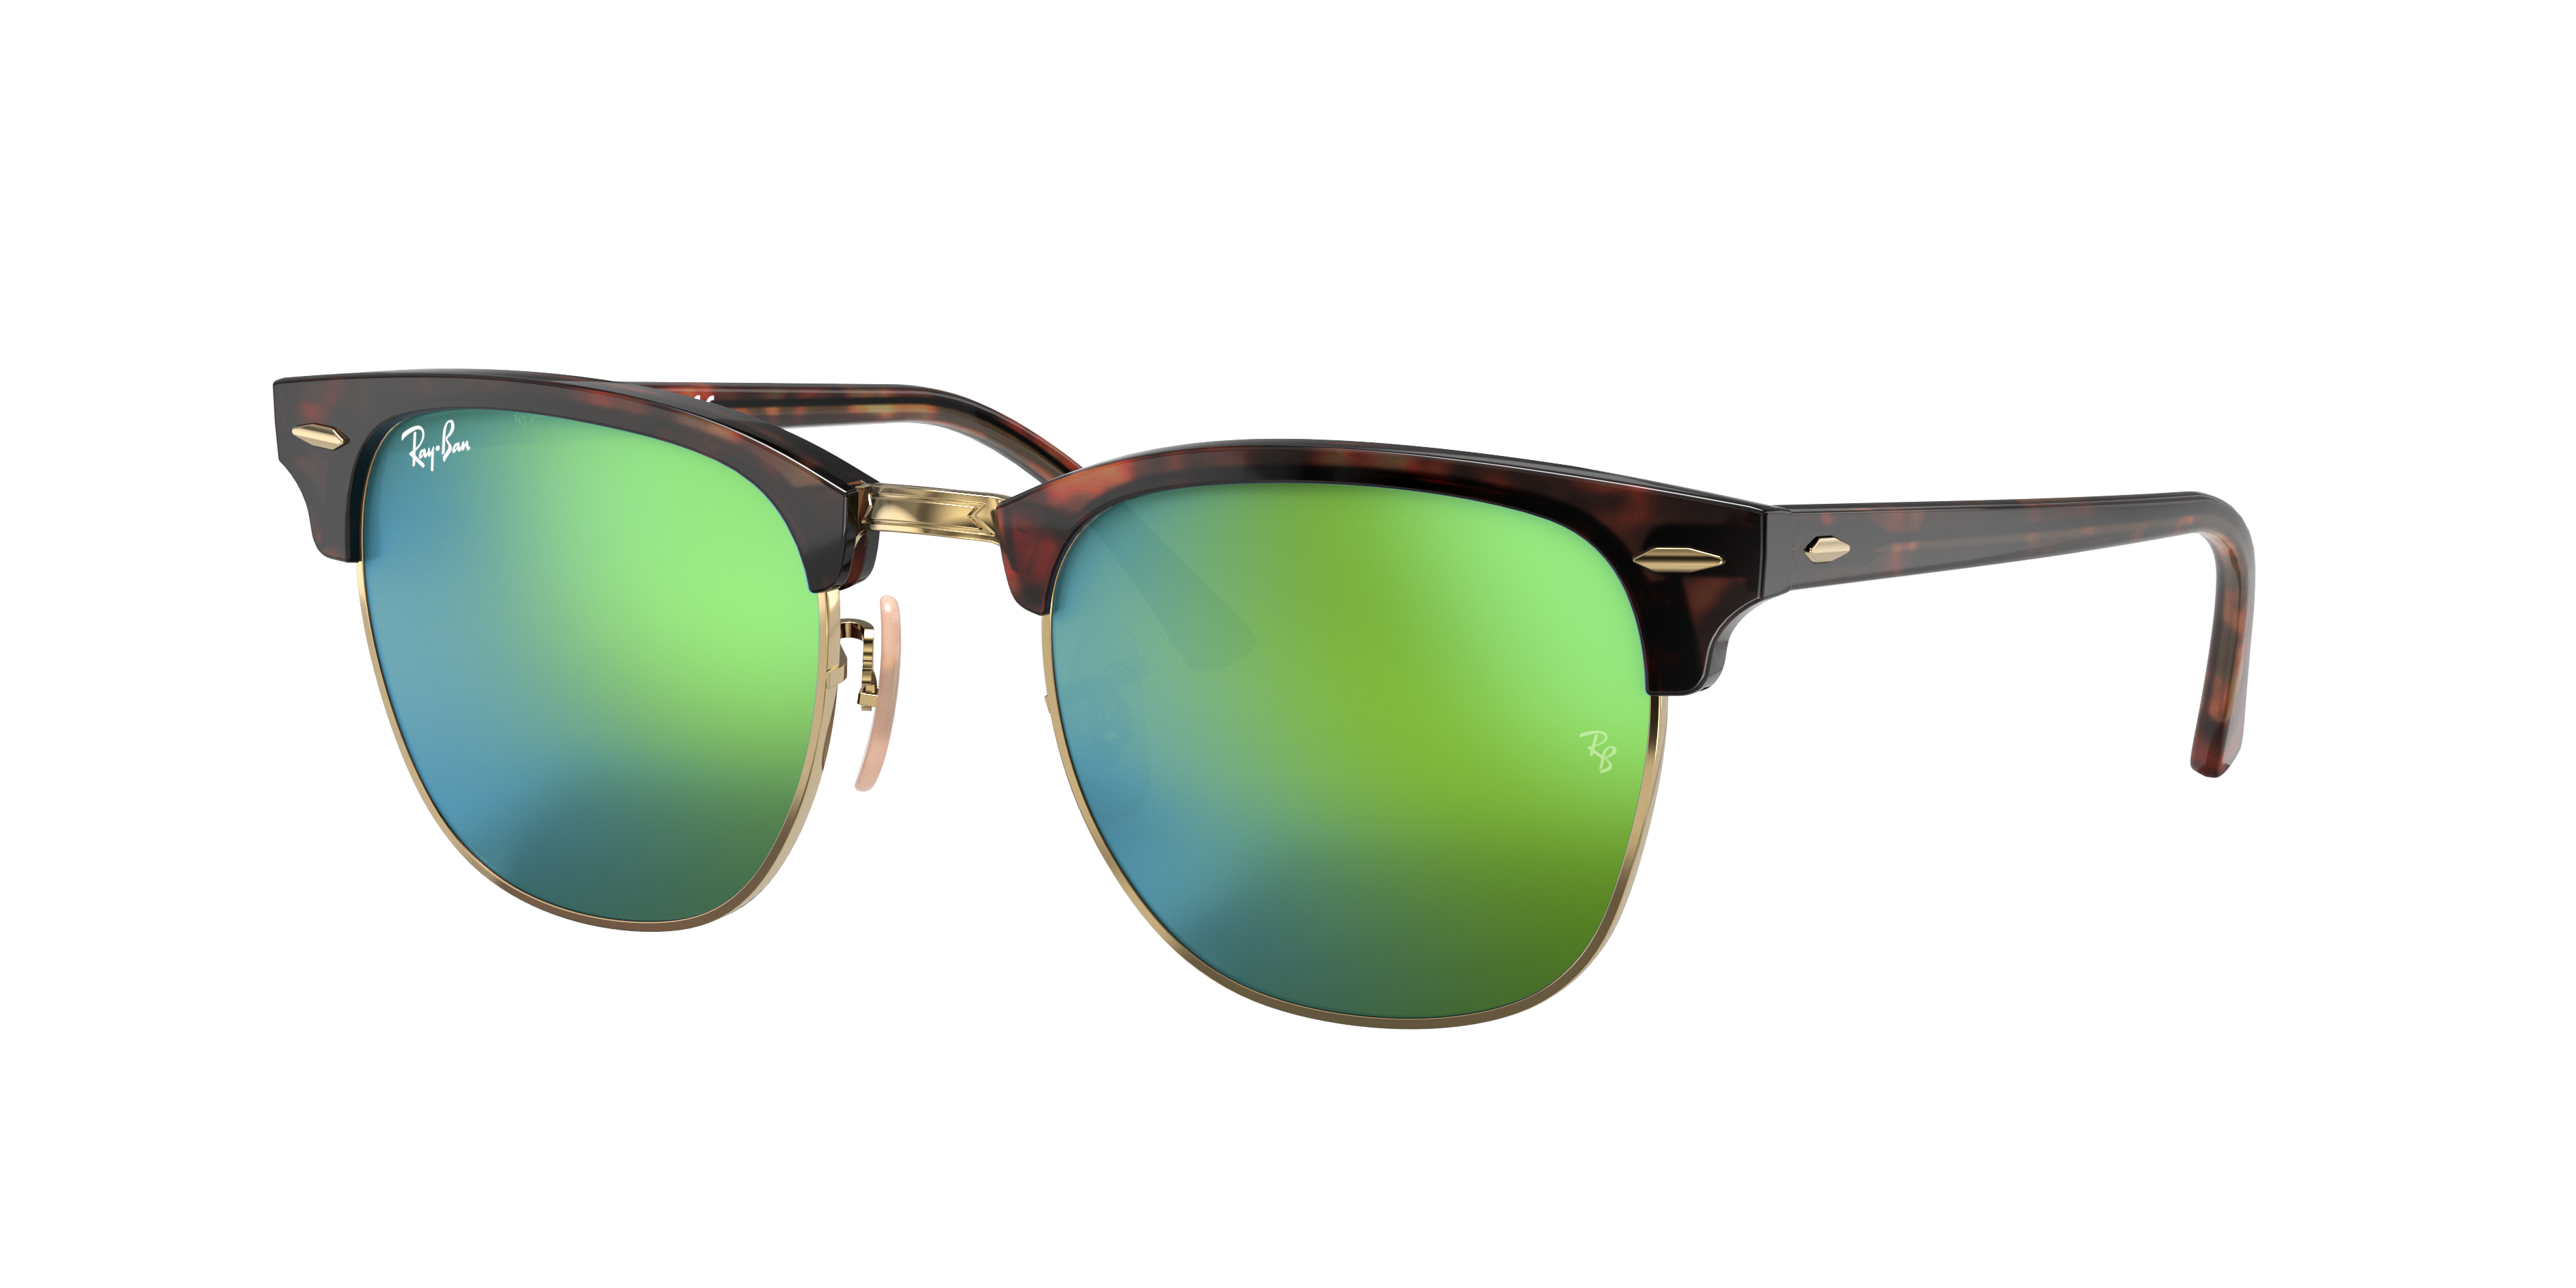 Arriba 95+ imagen ray ban sunglasses with green lenses - Thptnganamst ...